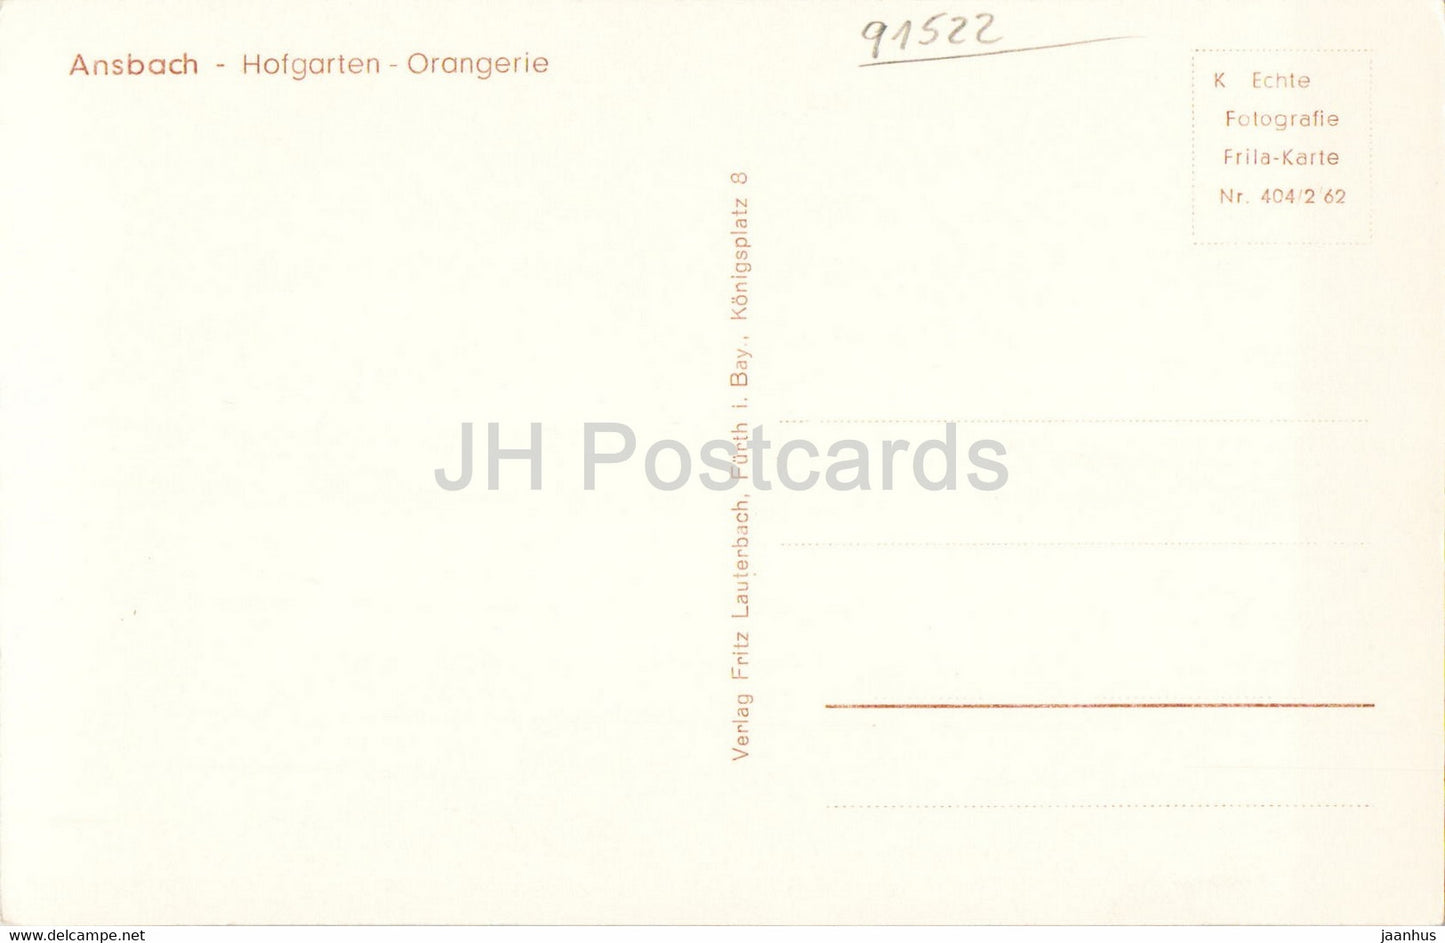 Ansbach - Hofgarten - Orangerie - old postcard - Germany - unused